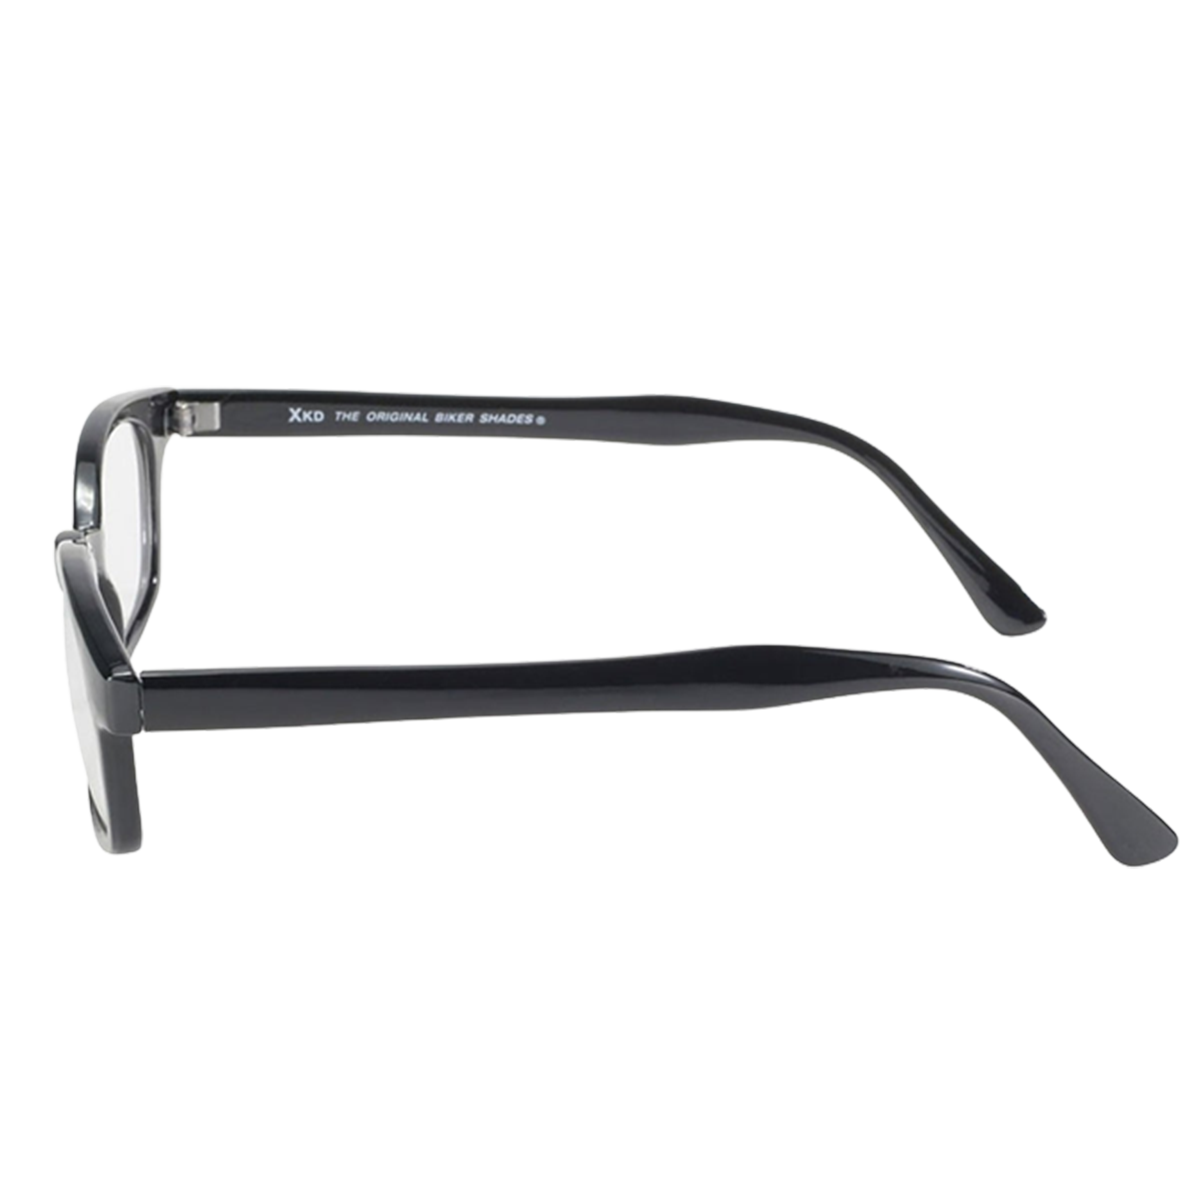 X-KD's 1011 sunglasses - Photochromic lenses Day2Nite